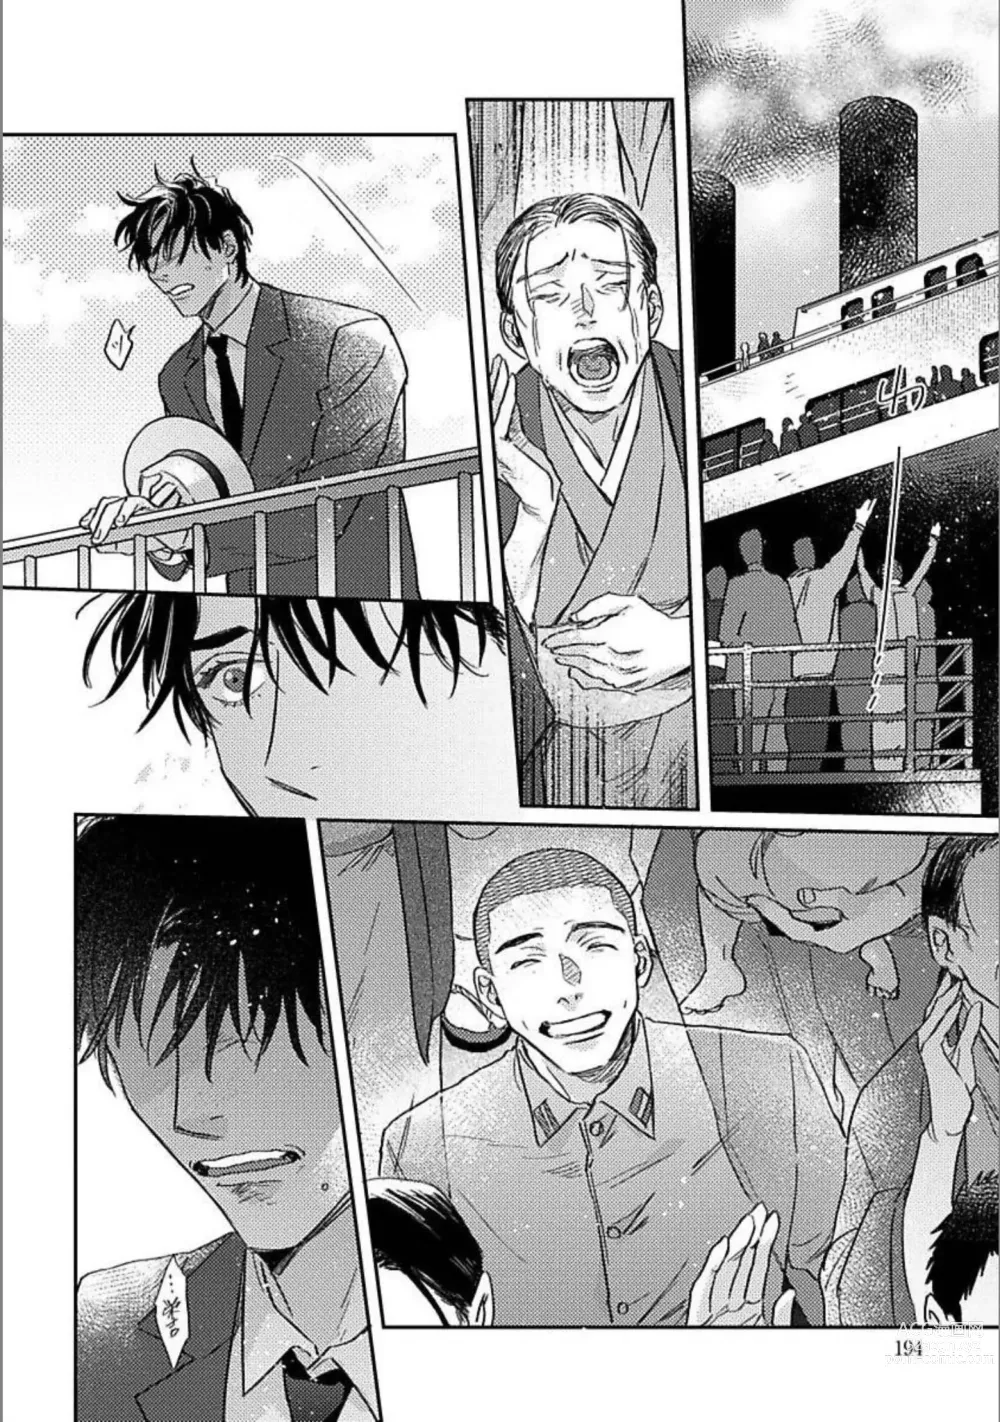 Page 195 of manga Hitori de Yoru wa Koerarenai - I Cant Stand Another Night Alone